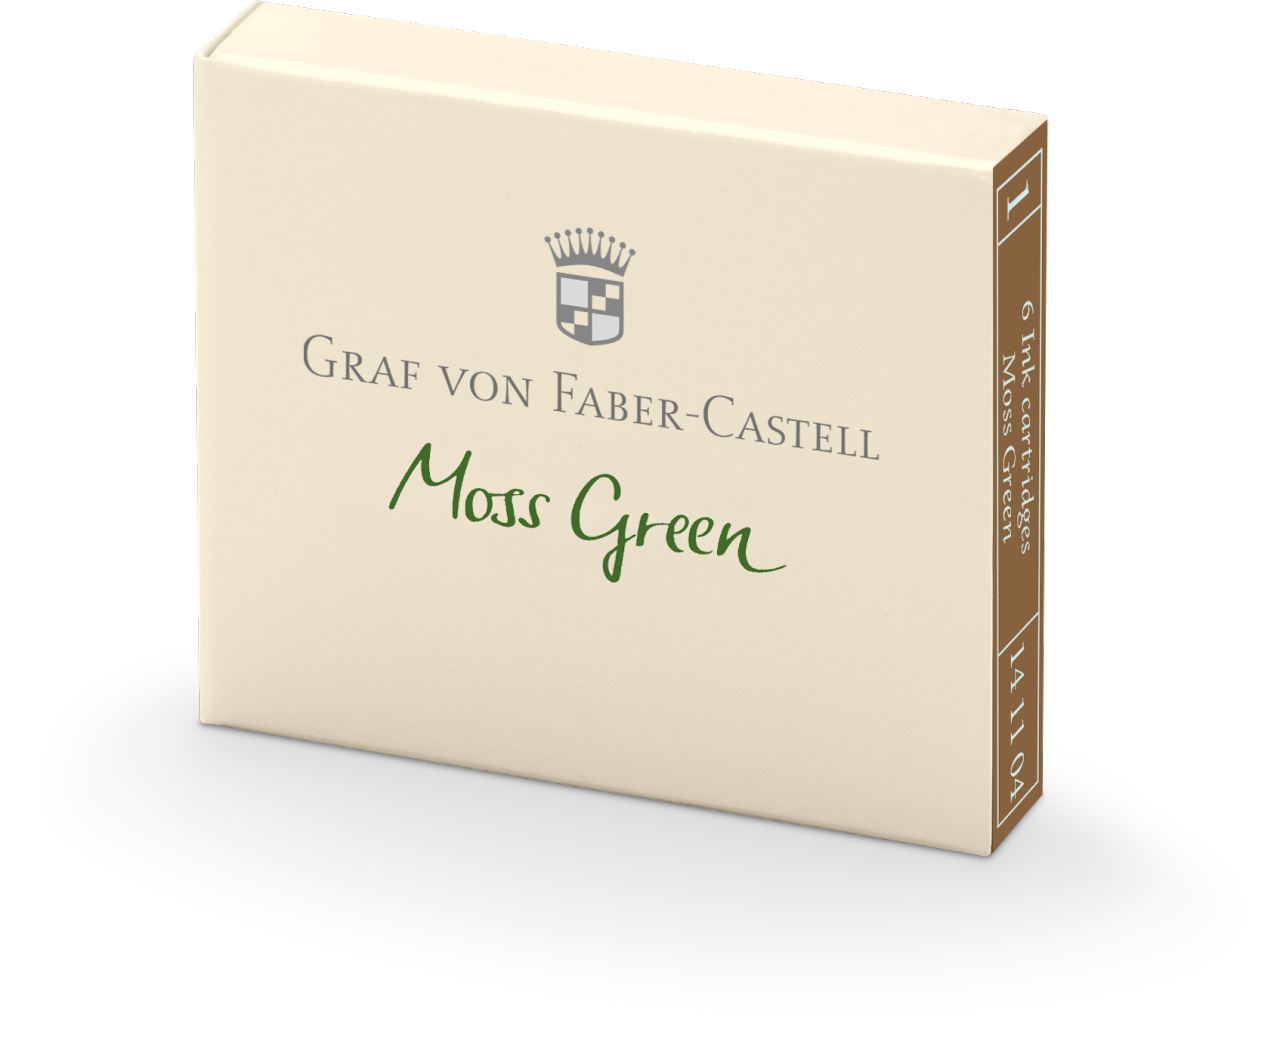 Graf-von-Faber-Castell - 6 ink cartridges, Moss Green